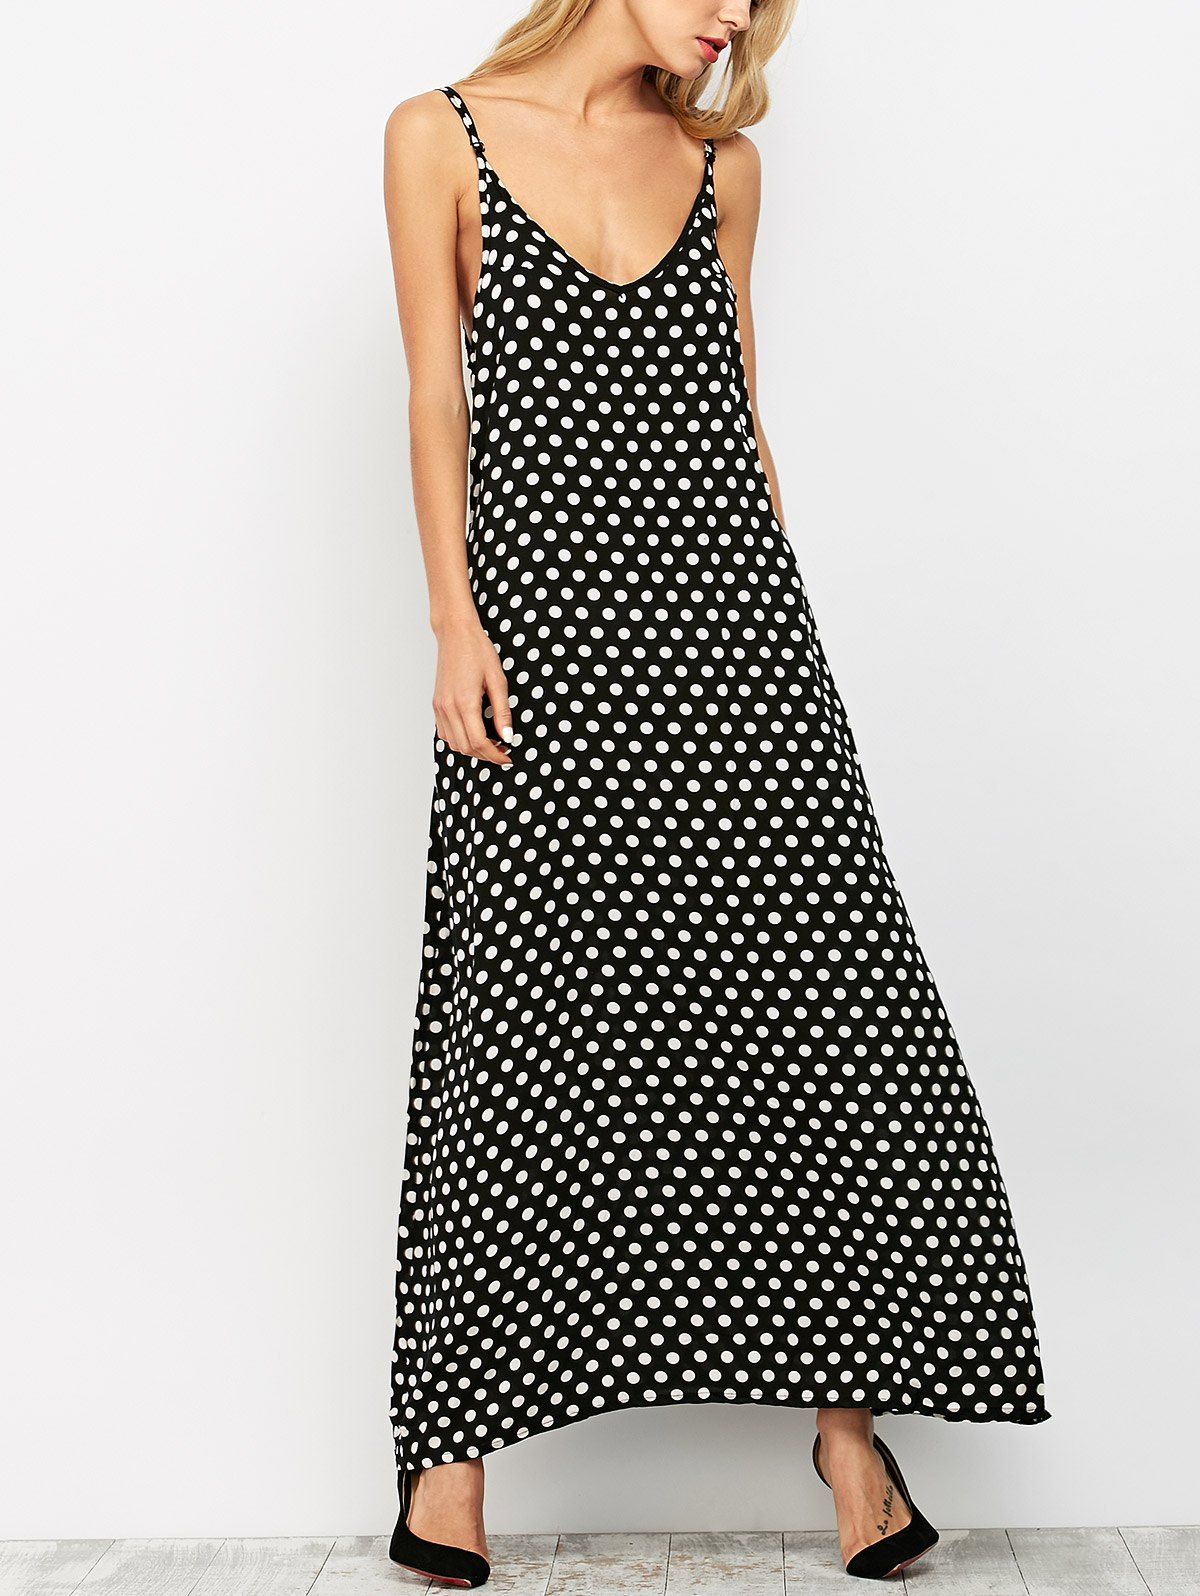 Polka Dot A-Line Maxi Casual Summer Dress - BLACK XL